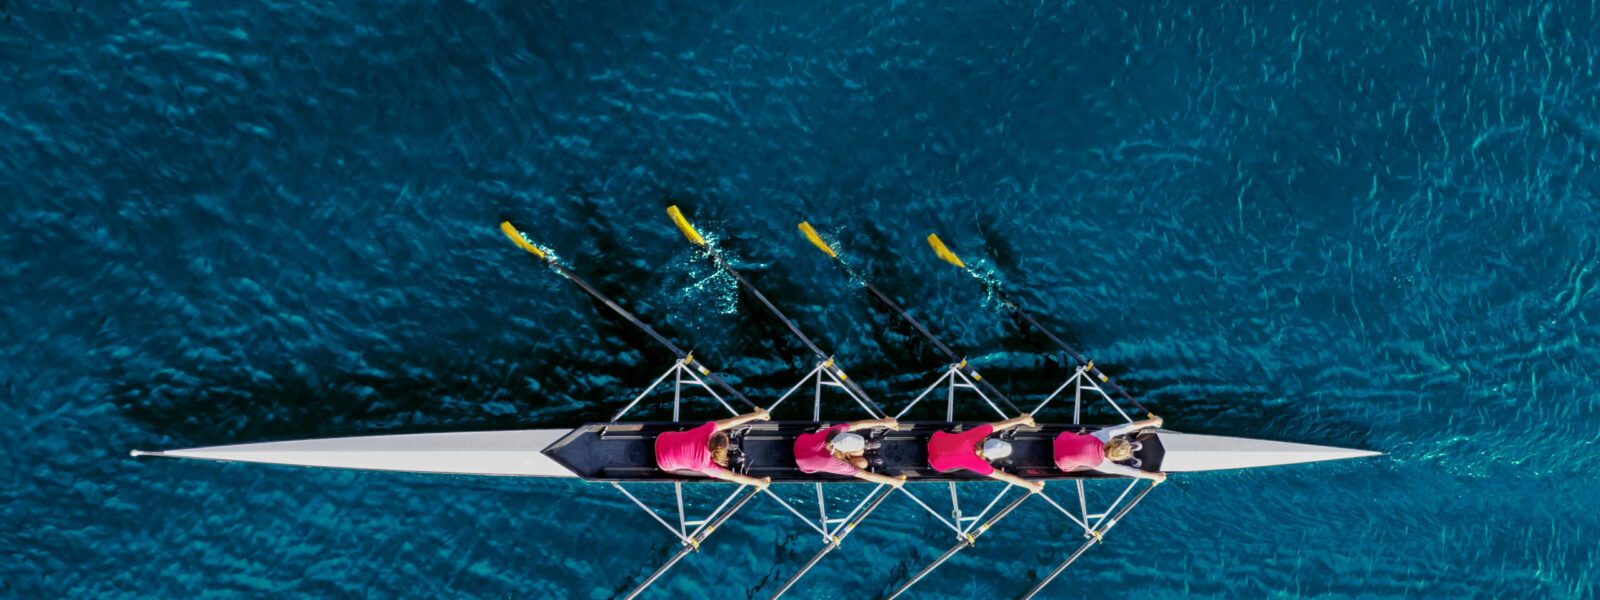 Women’s rowing team on blue water